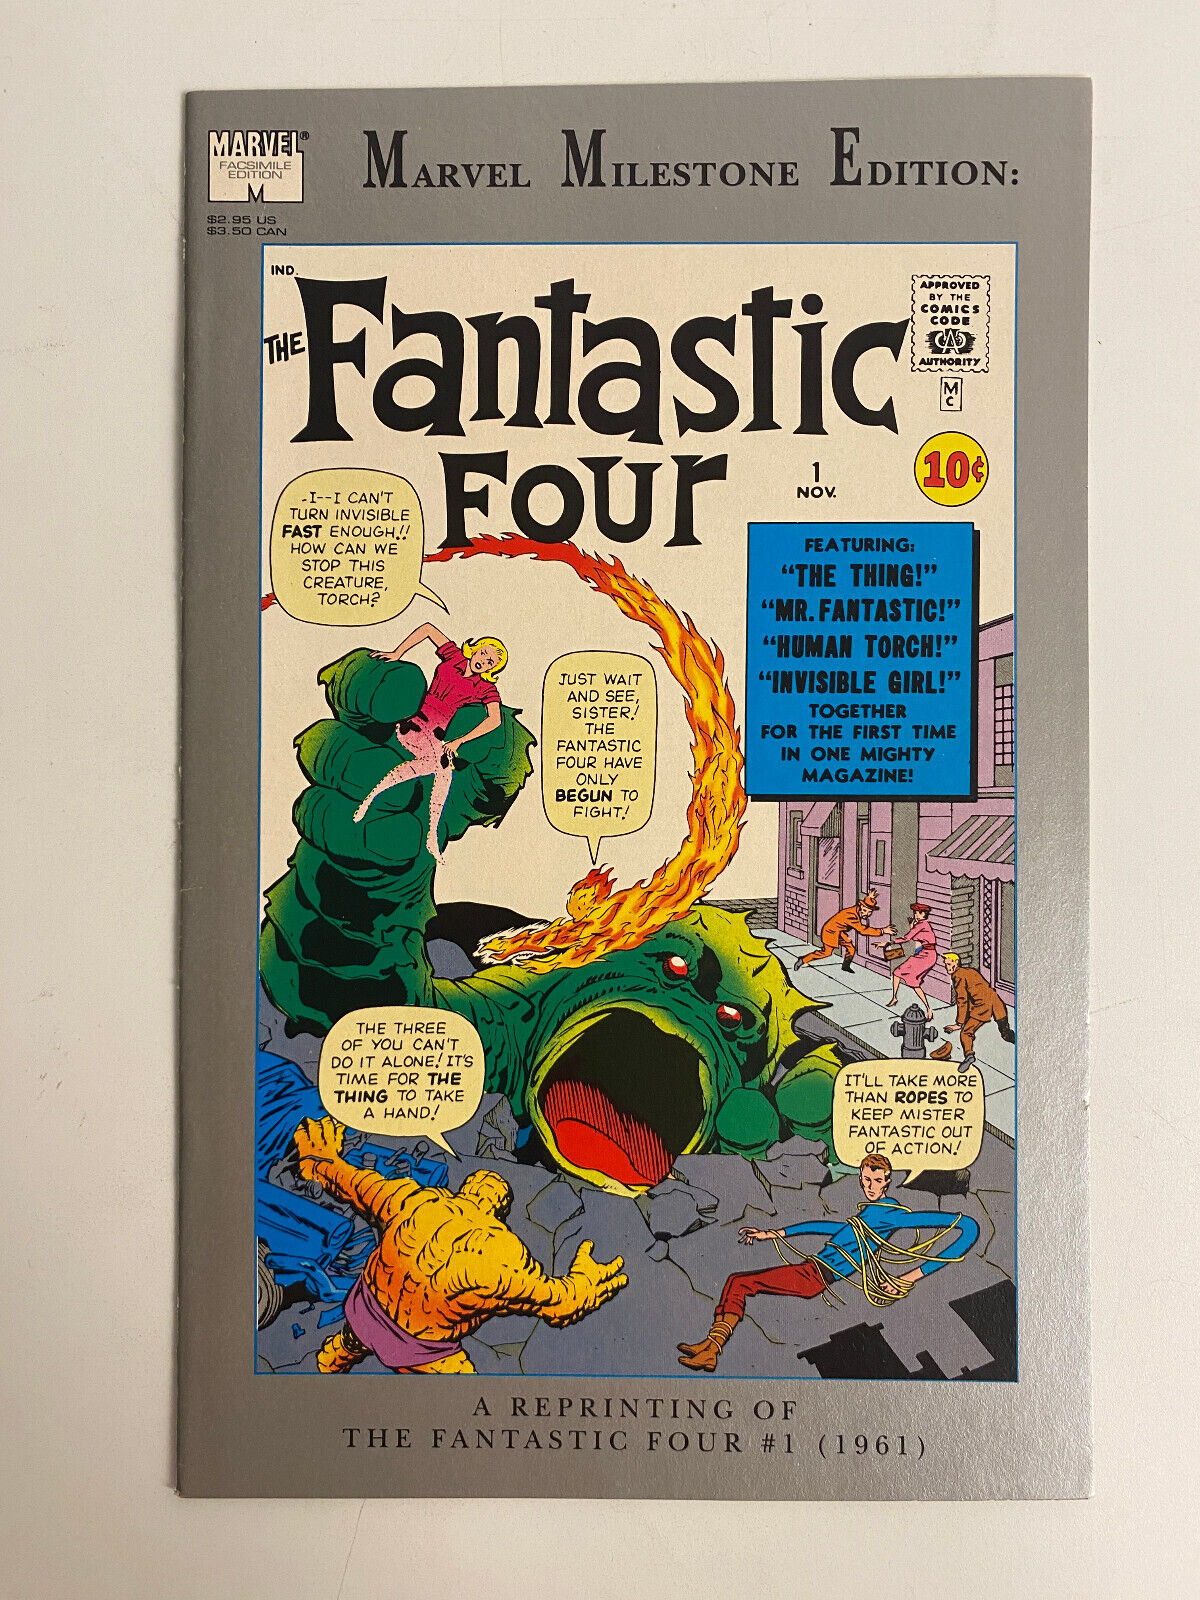 Marvel Milestone Fantastic Four #1 (1993, Marvel) Reprints their 1st appearance